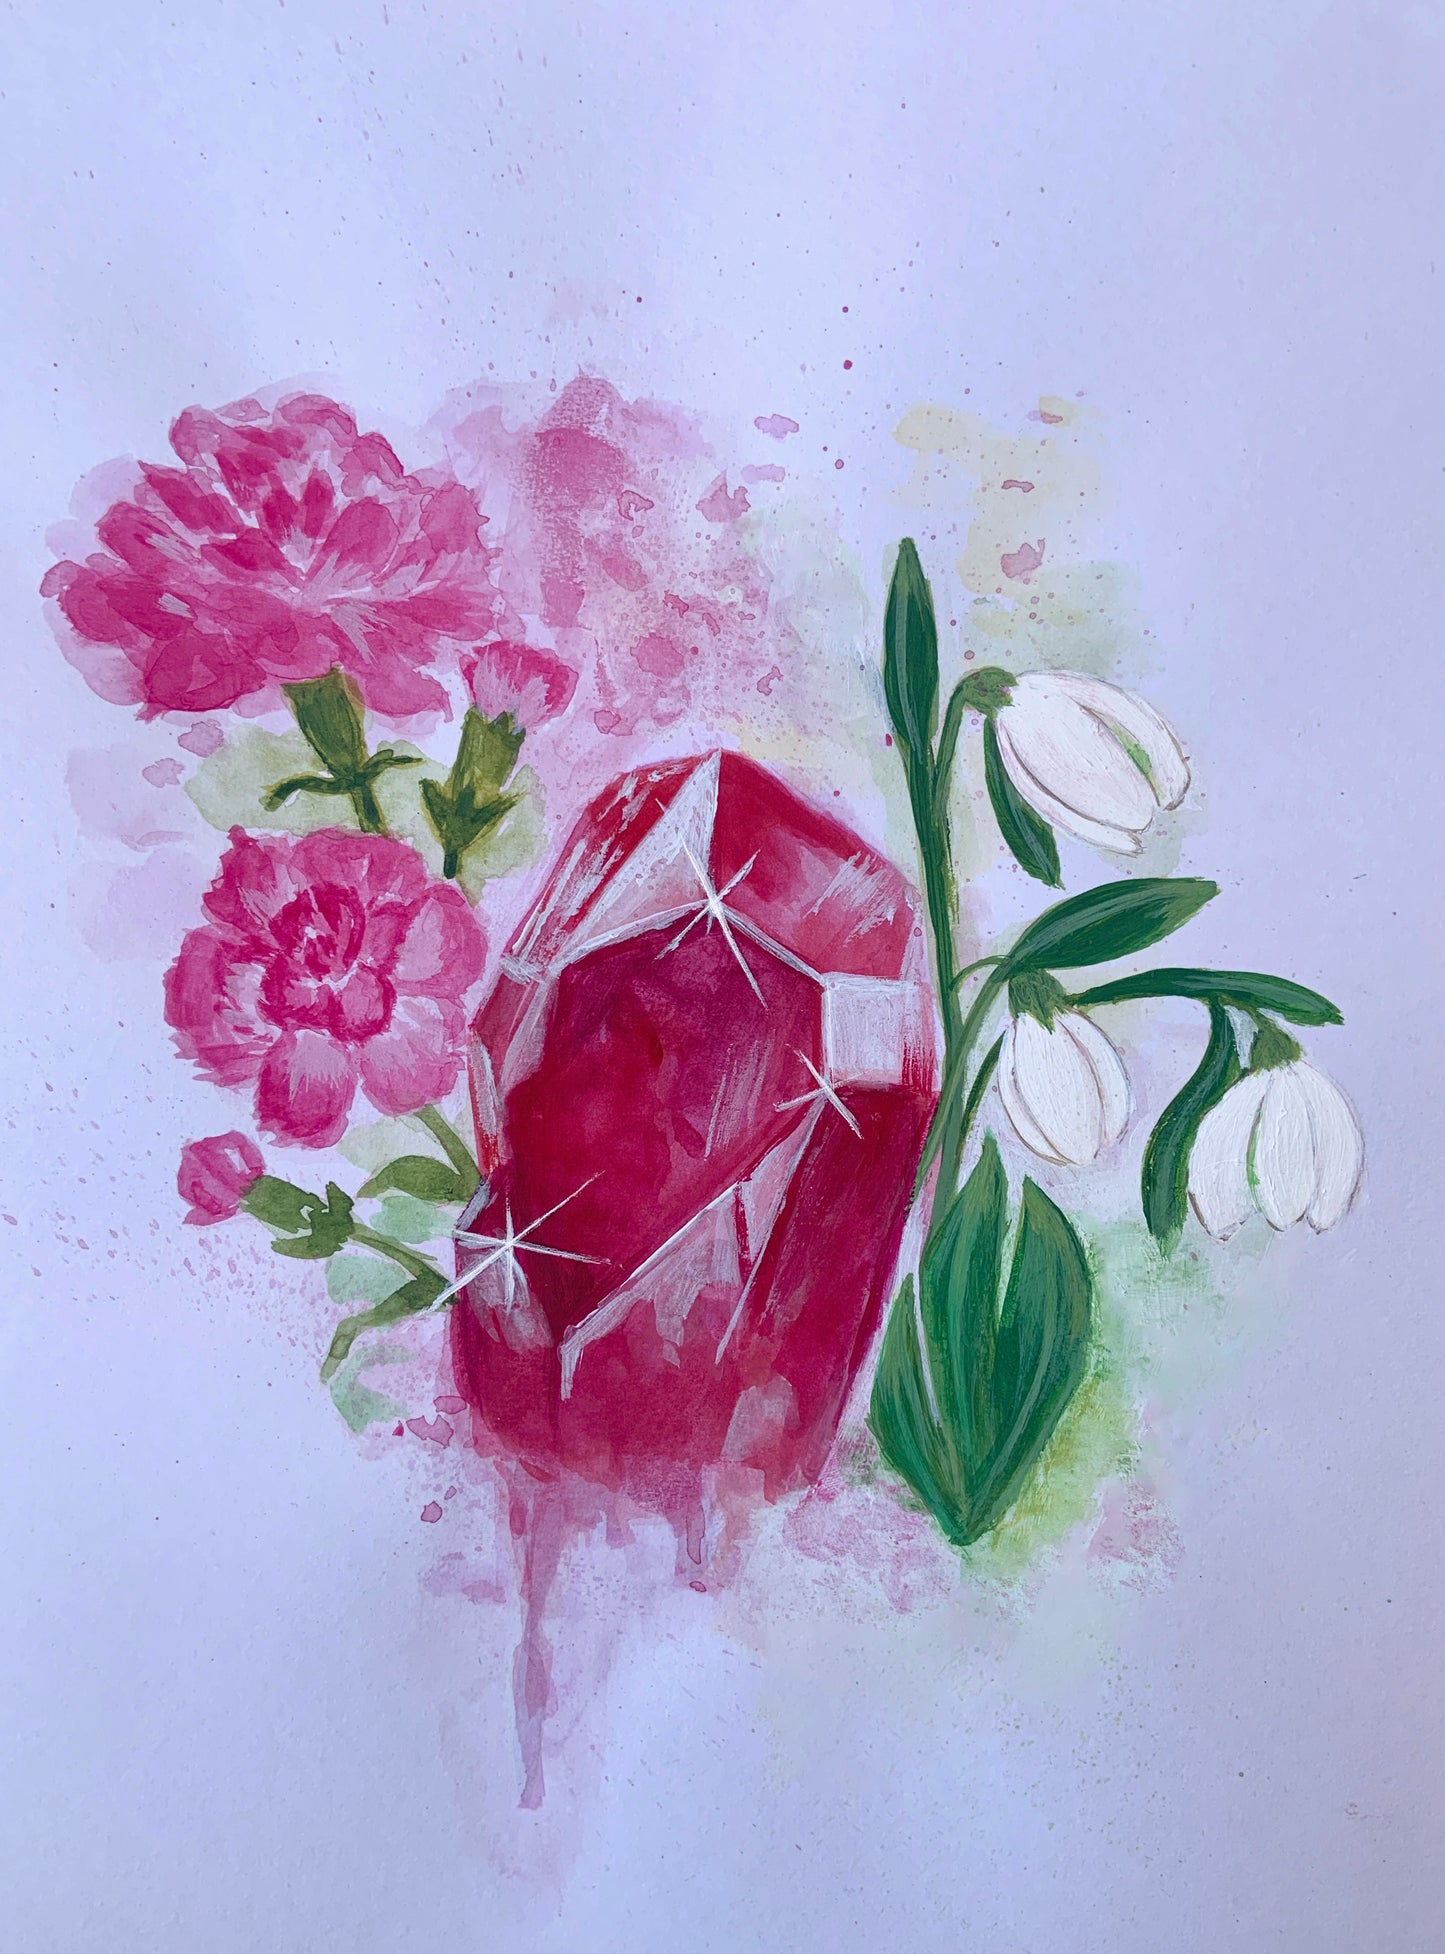 January Birthstone - Garnet, Carnation and Snowdrop